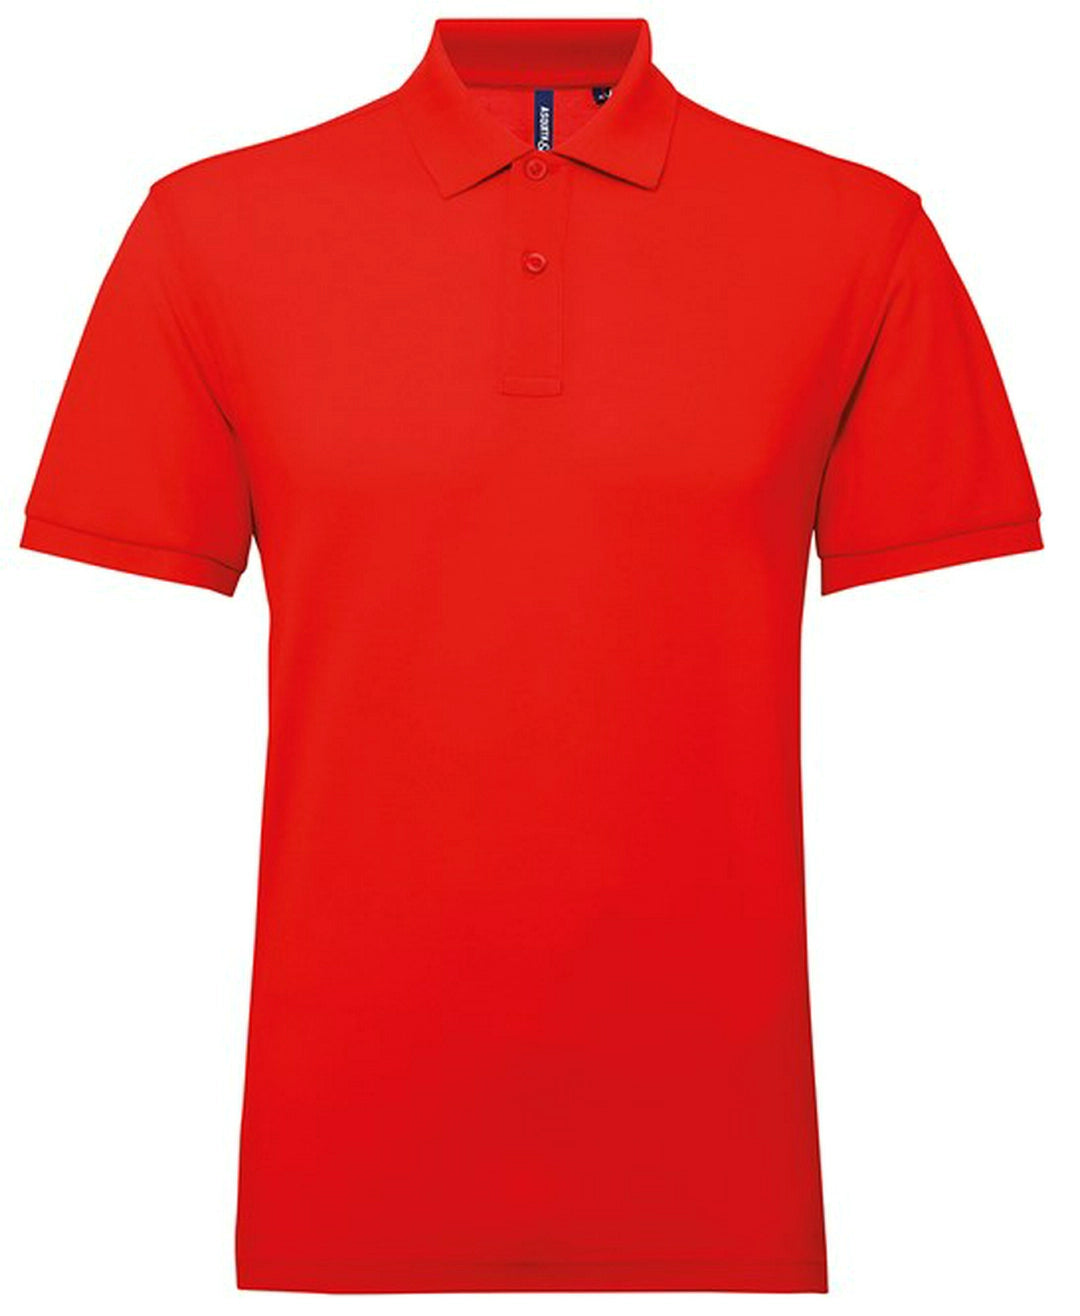 Asquith & Fox AQ015 Mens Polycotton Blend Polo Shirt - COOZO